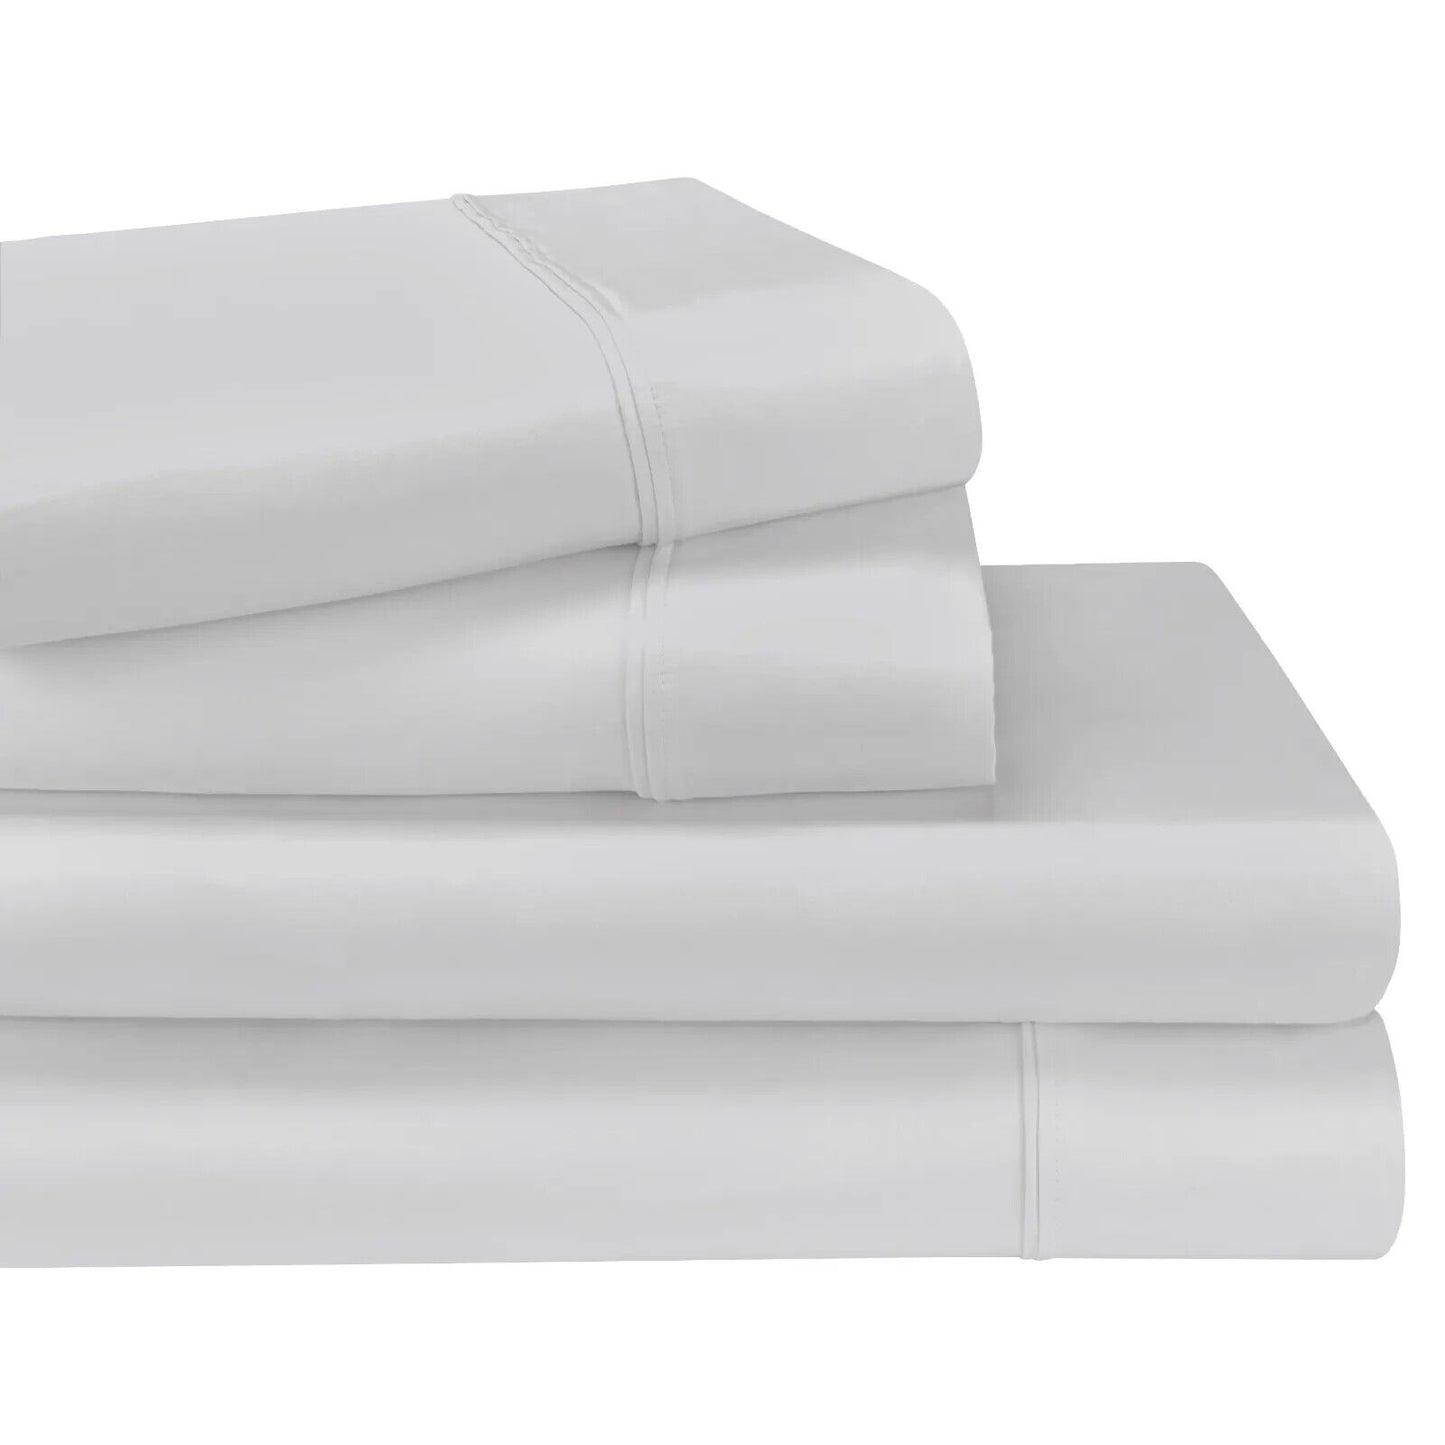 4 Piece Bed Sheet Set Deep Pockets King Queen Size Super Soft Cotton 2500 Series White Color